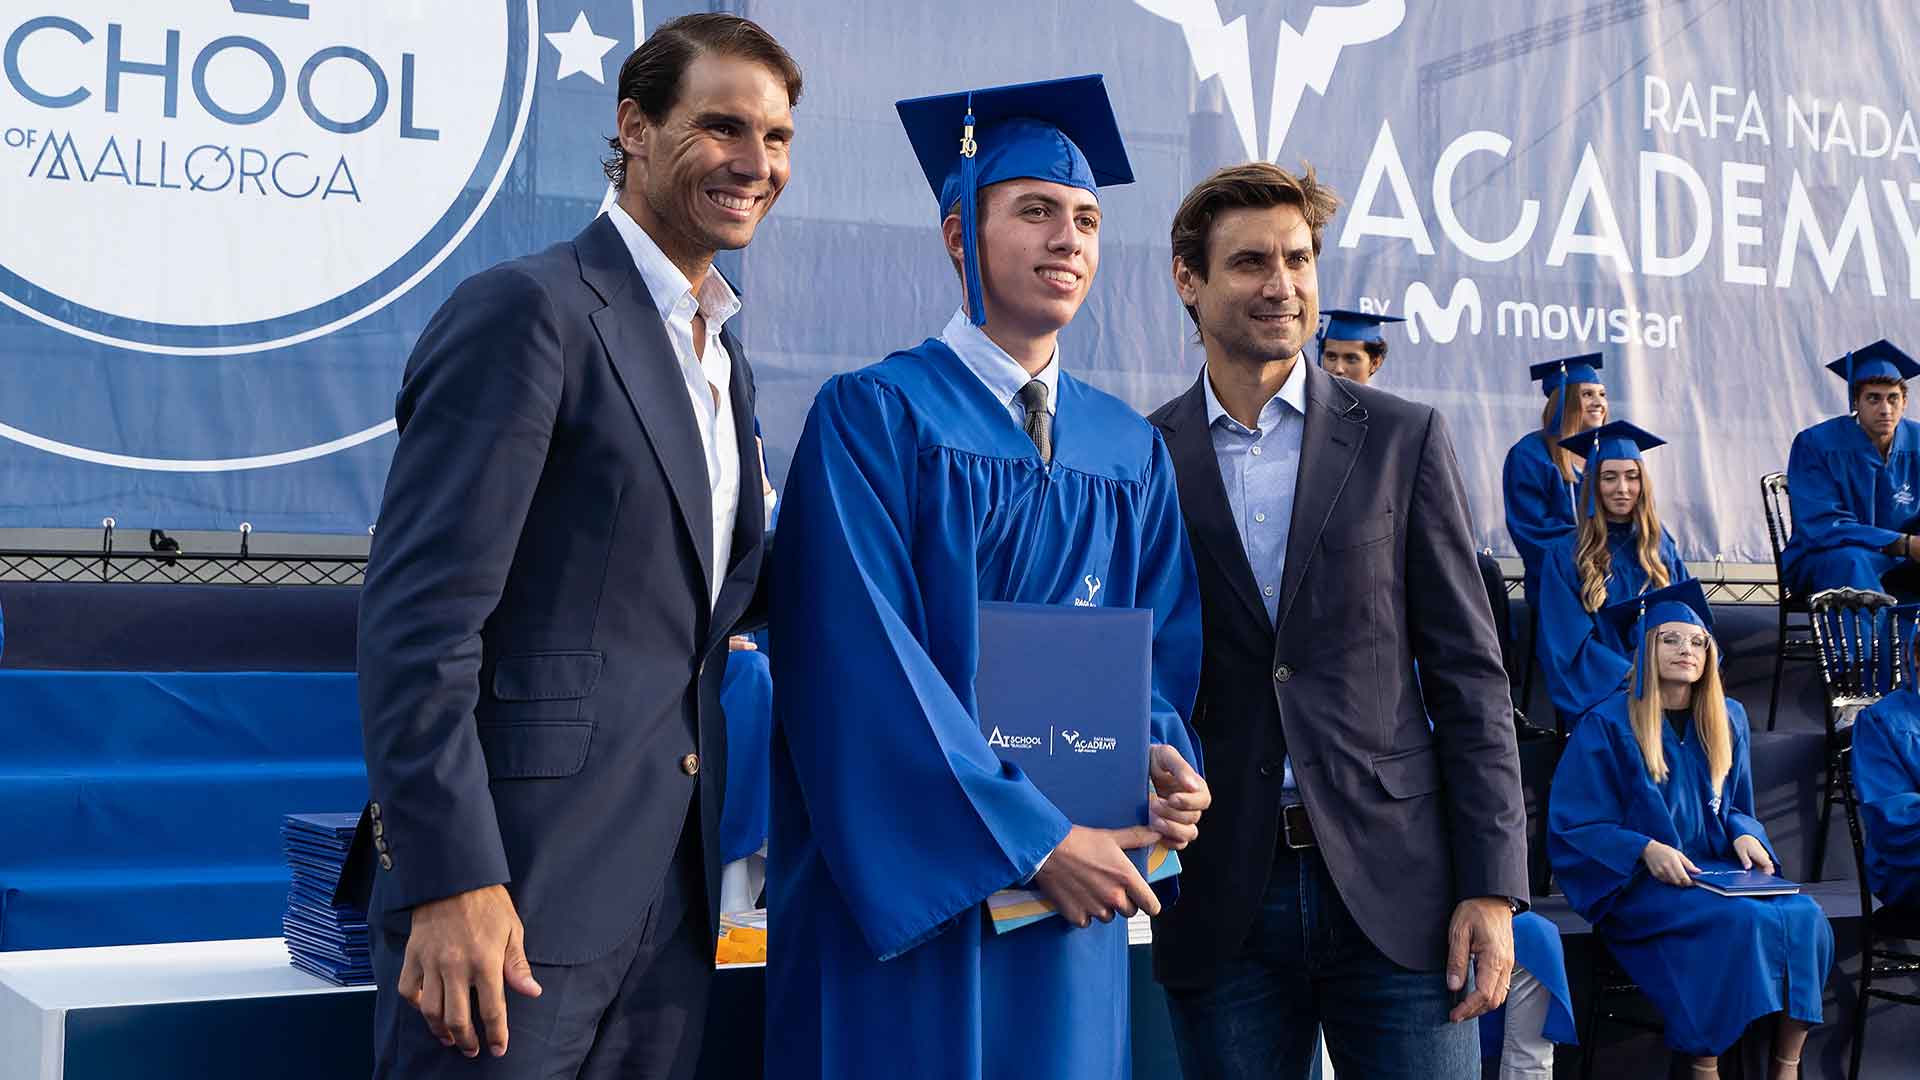 <a href='https://www.atptour.com/en/players/rafael-nadal/n409/overview'>Rafael Nadal</a> and <a href='https://www.atptour.com/en/players/david-ferrer/f401/overview'>David Ferrer</a> offer departing wisdom to the 2019 graduating class of the Rafa Nadal Academy by Movistar.